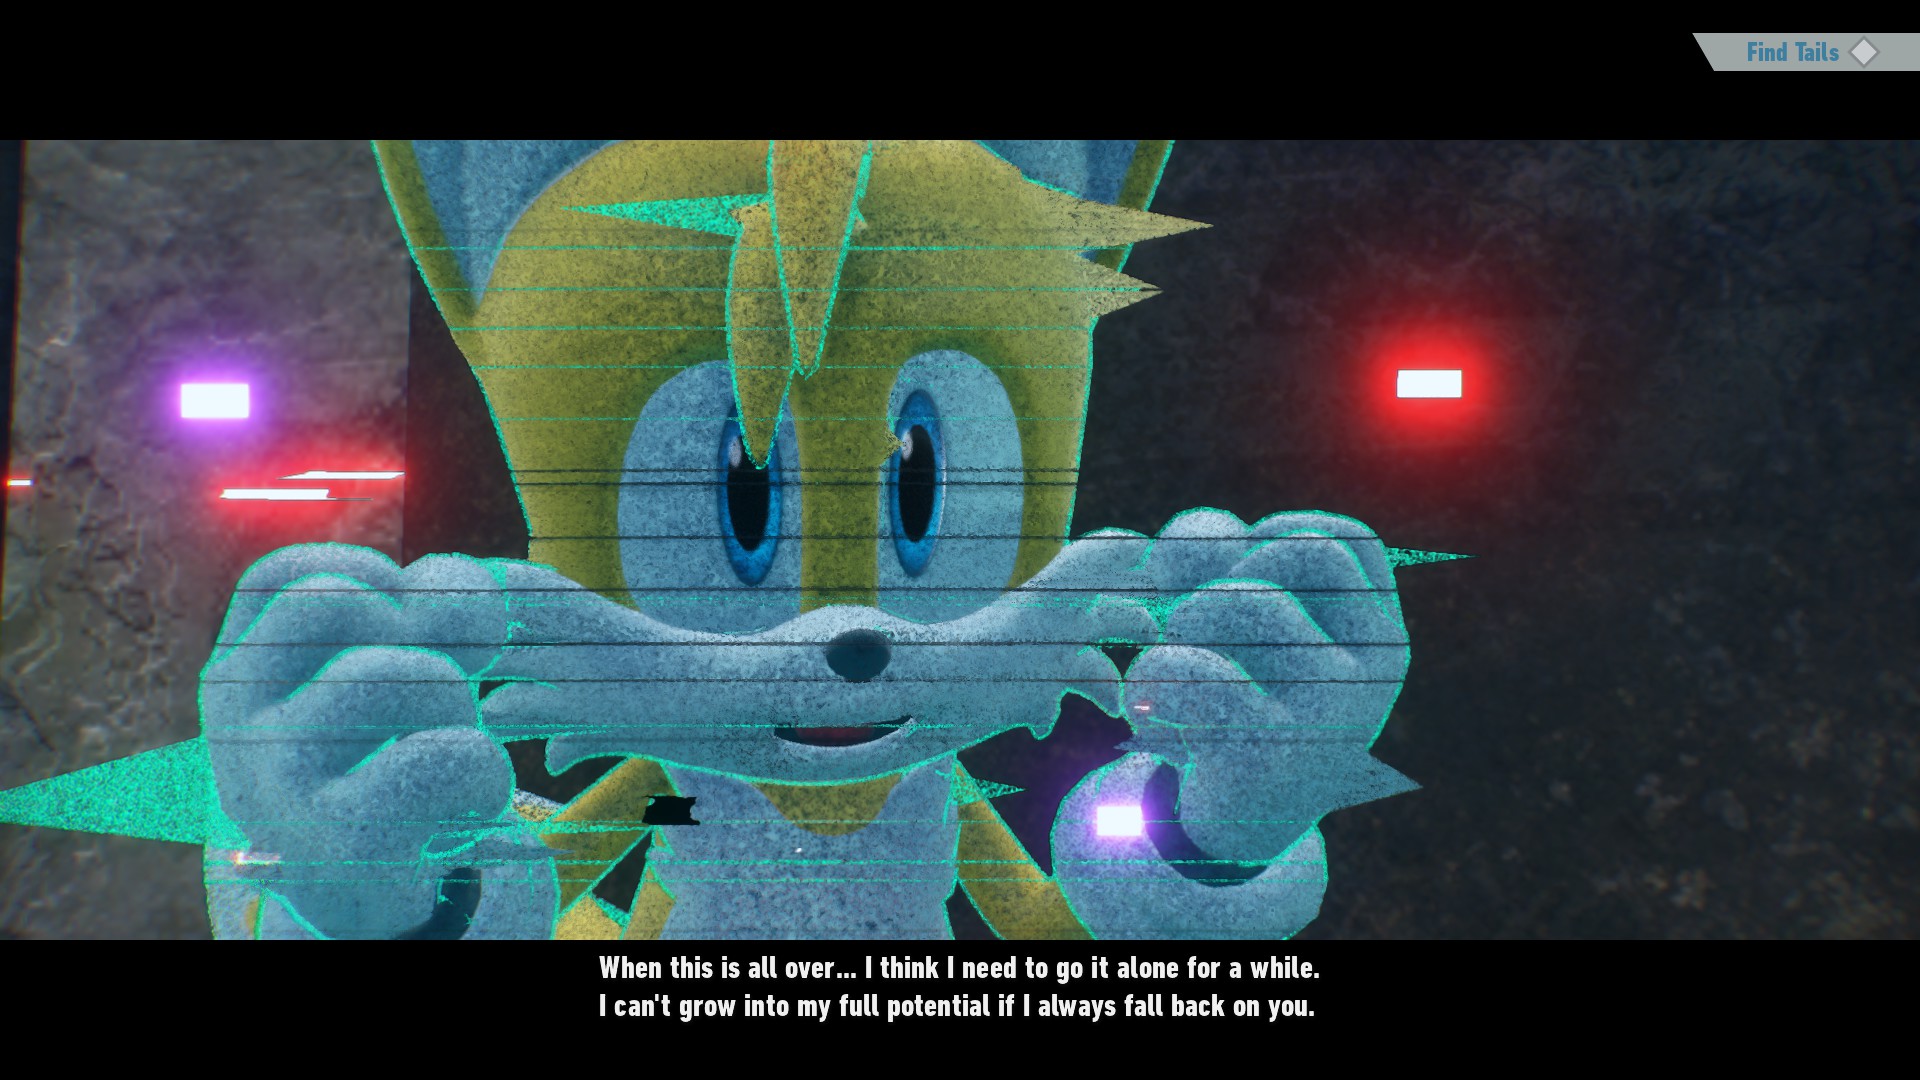 New Sonic Mania Screenshot Showcases Green Hill Zone Act 2 – SoaH City